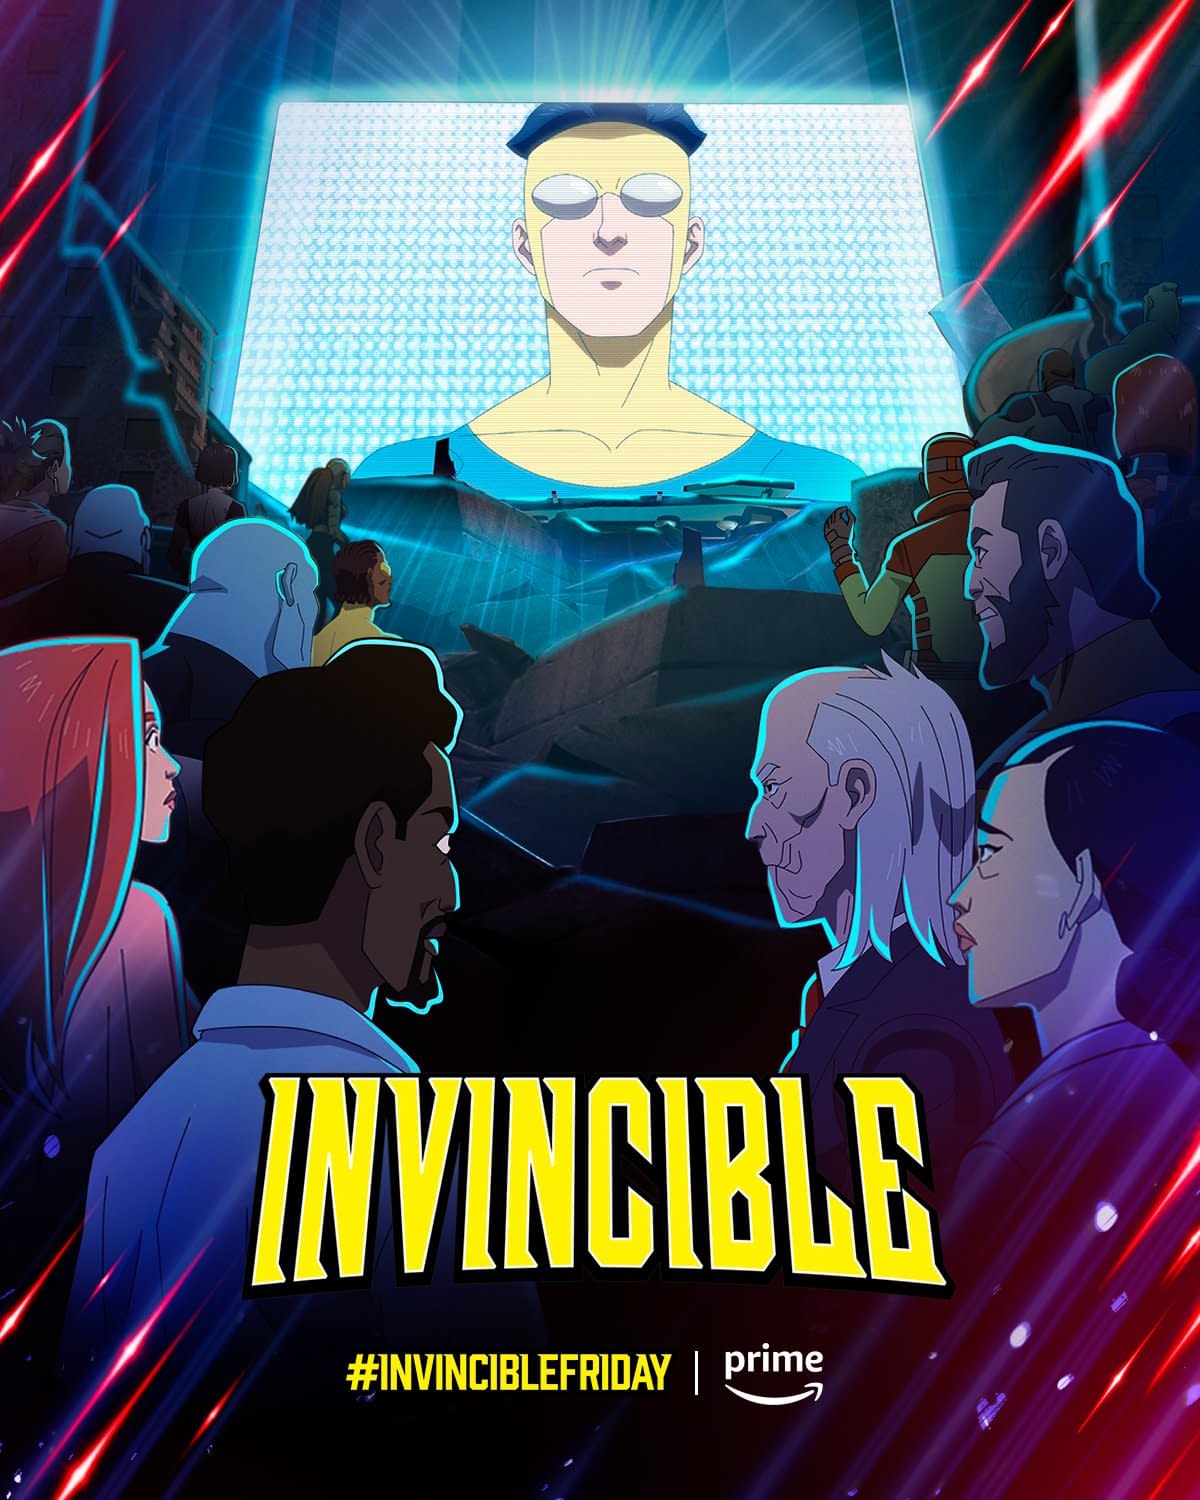 Invincible season 2 cast, trailer, plot, reviews, and more news